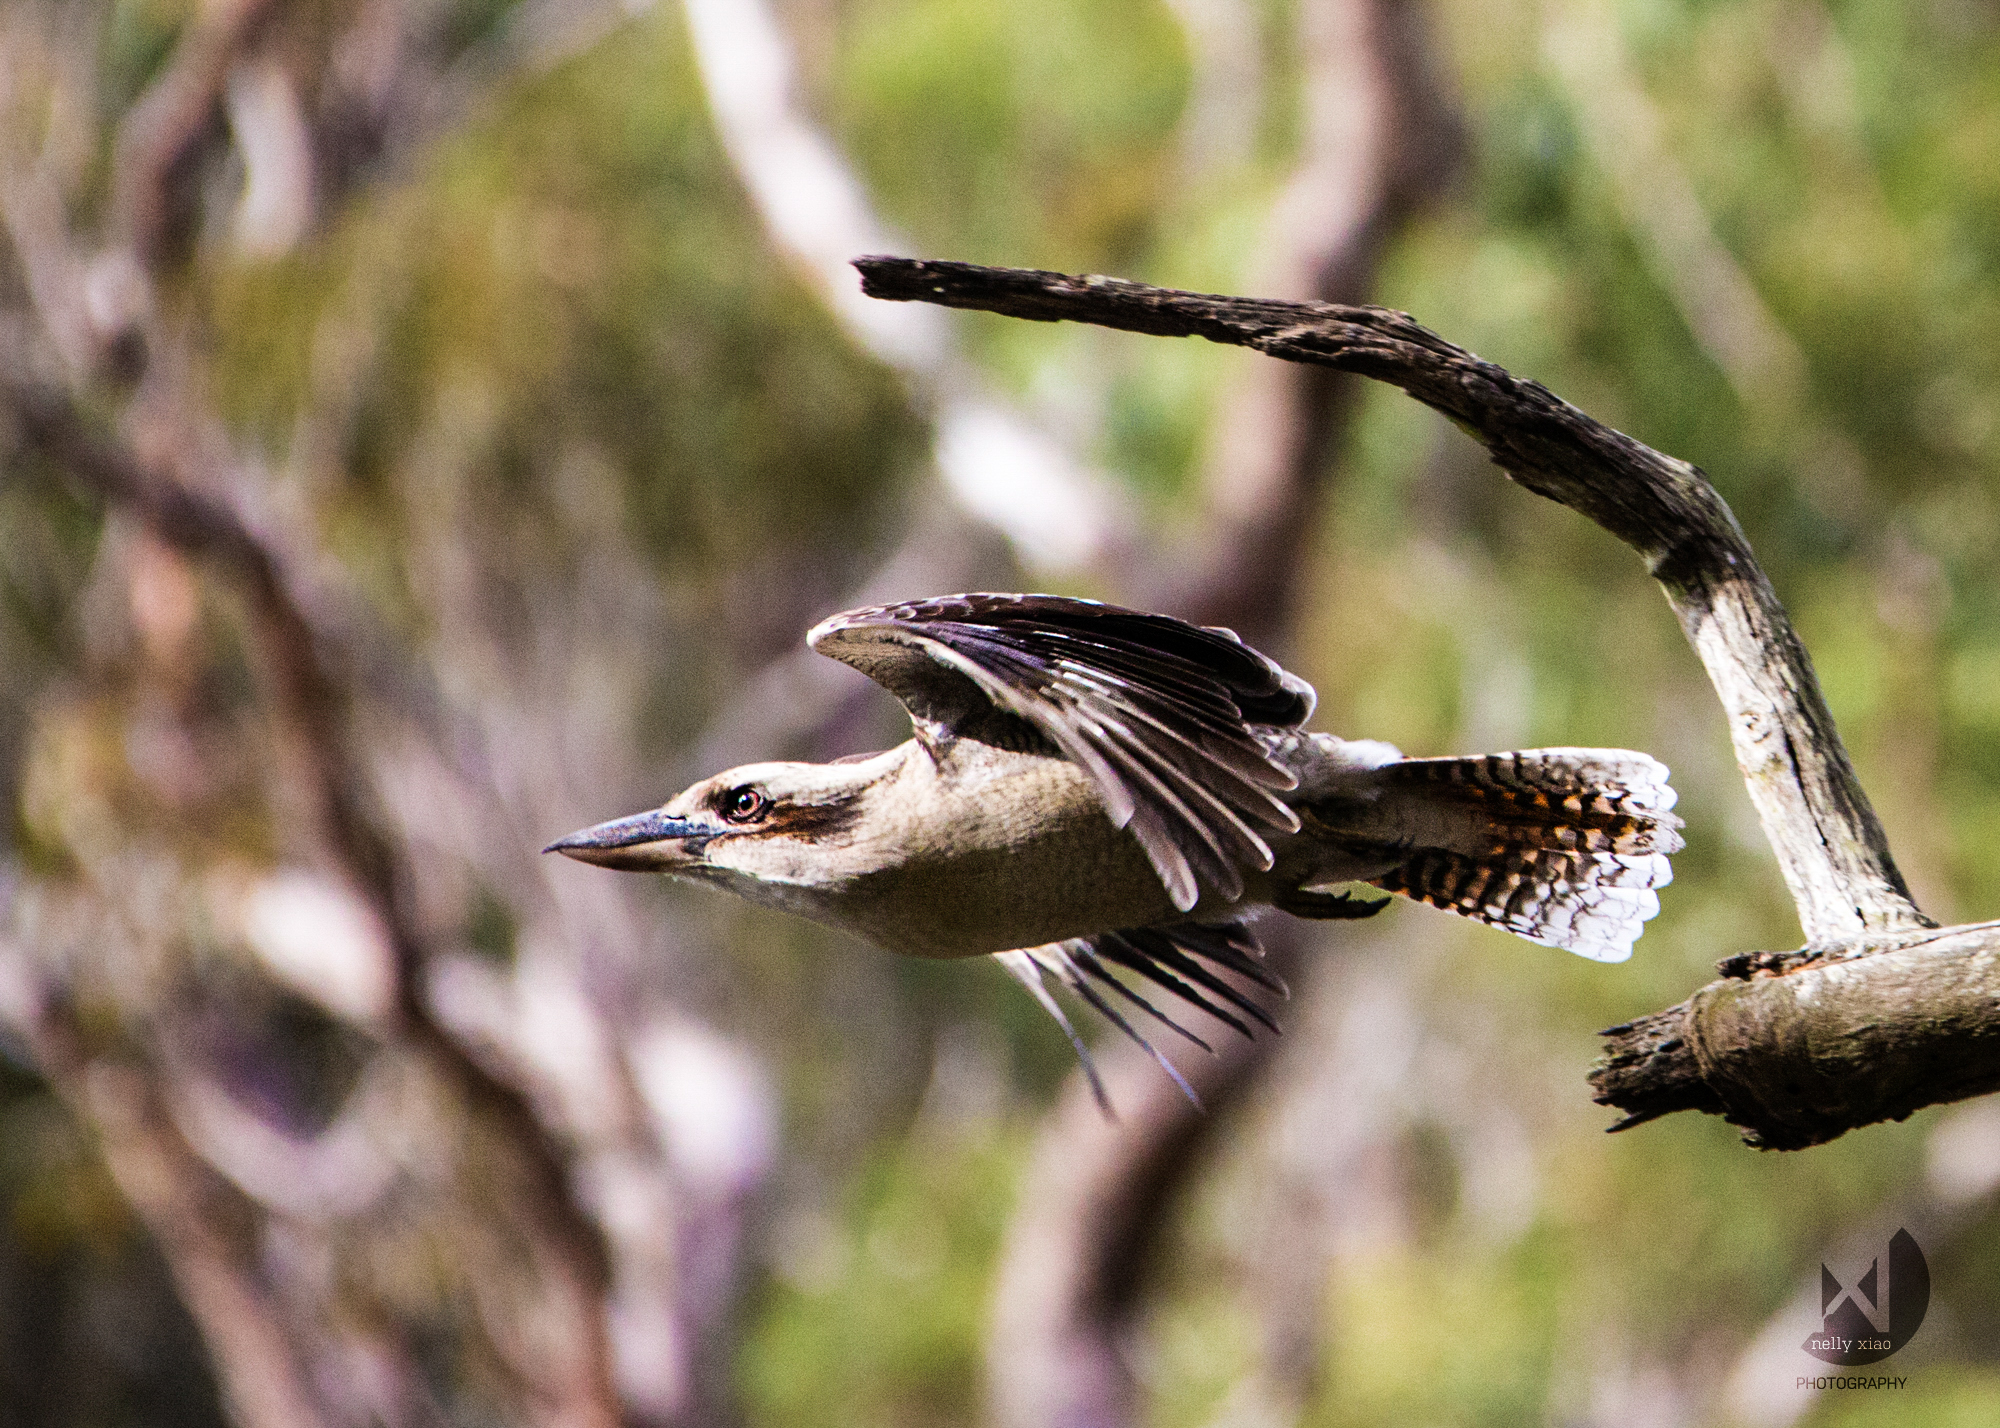   Laughing Kookaburra   Royal National Park NSW, 2016 